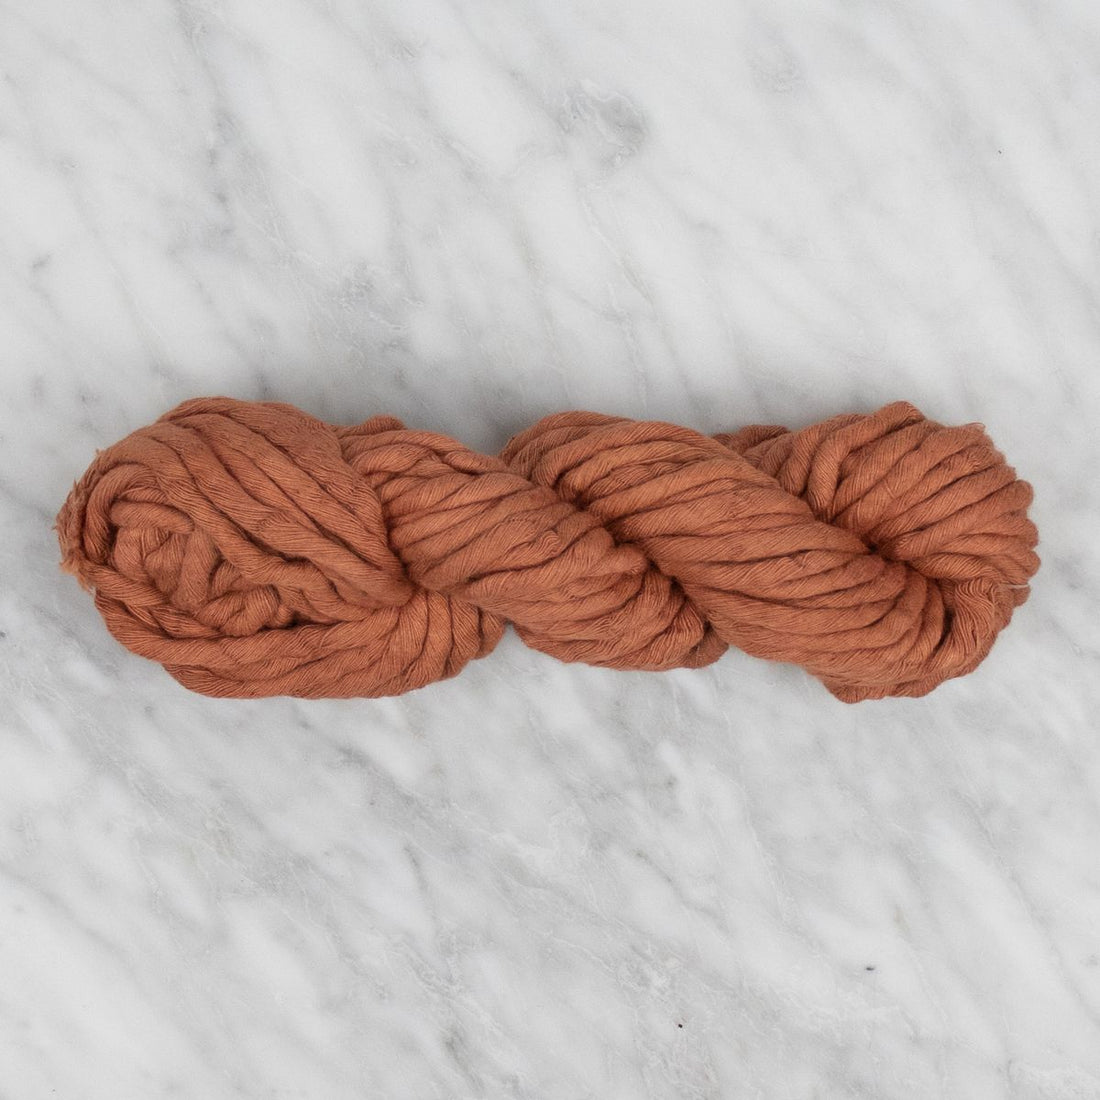 5mm Hand-Dyed Cotton String - Orange Rust - 100 grams